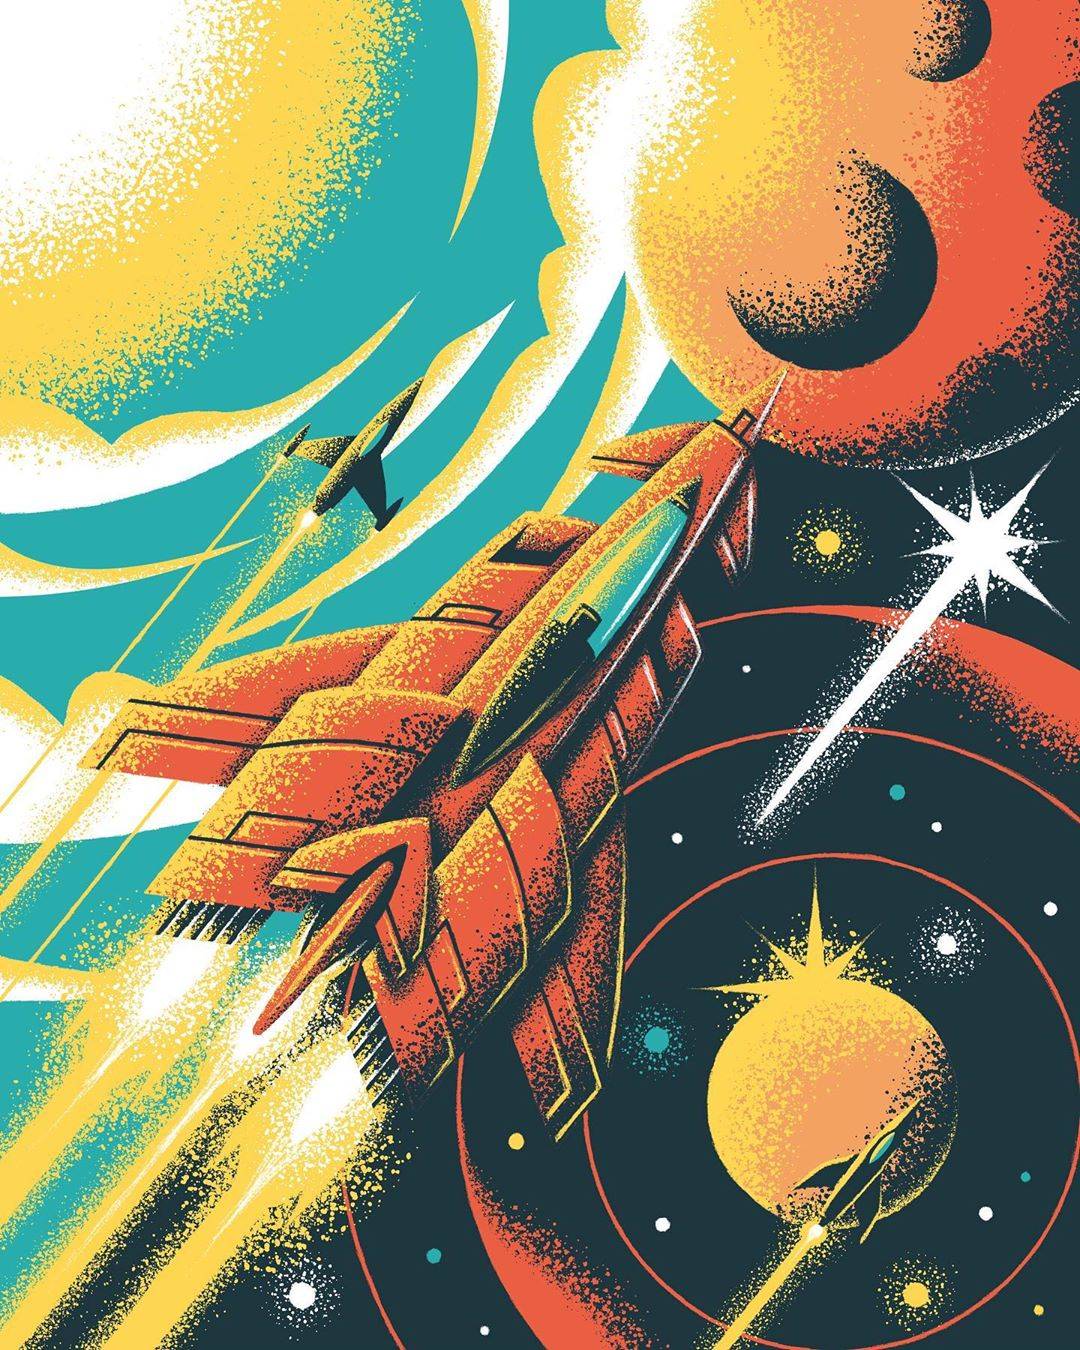 Rocket illustration by Michael Fugoso